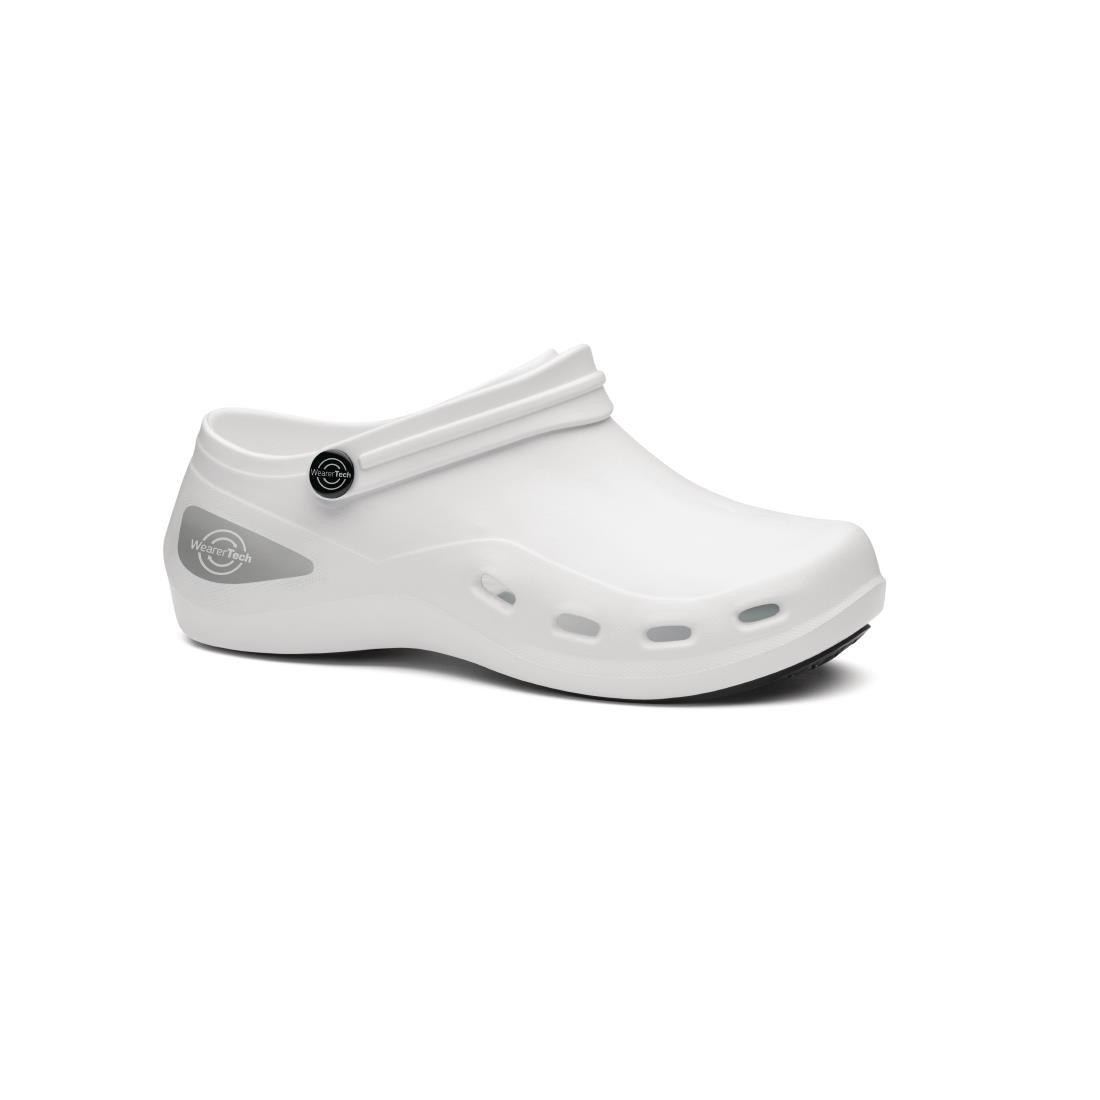 WearerTech Unisex Invigorate White Safety Shoe Size 8 - BB199-42  - 1